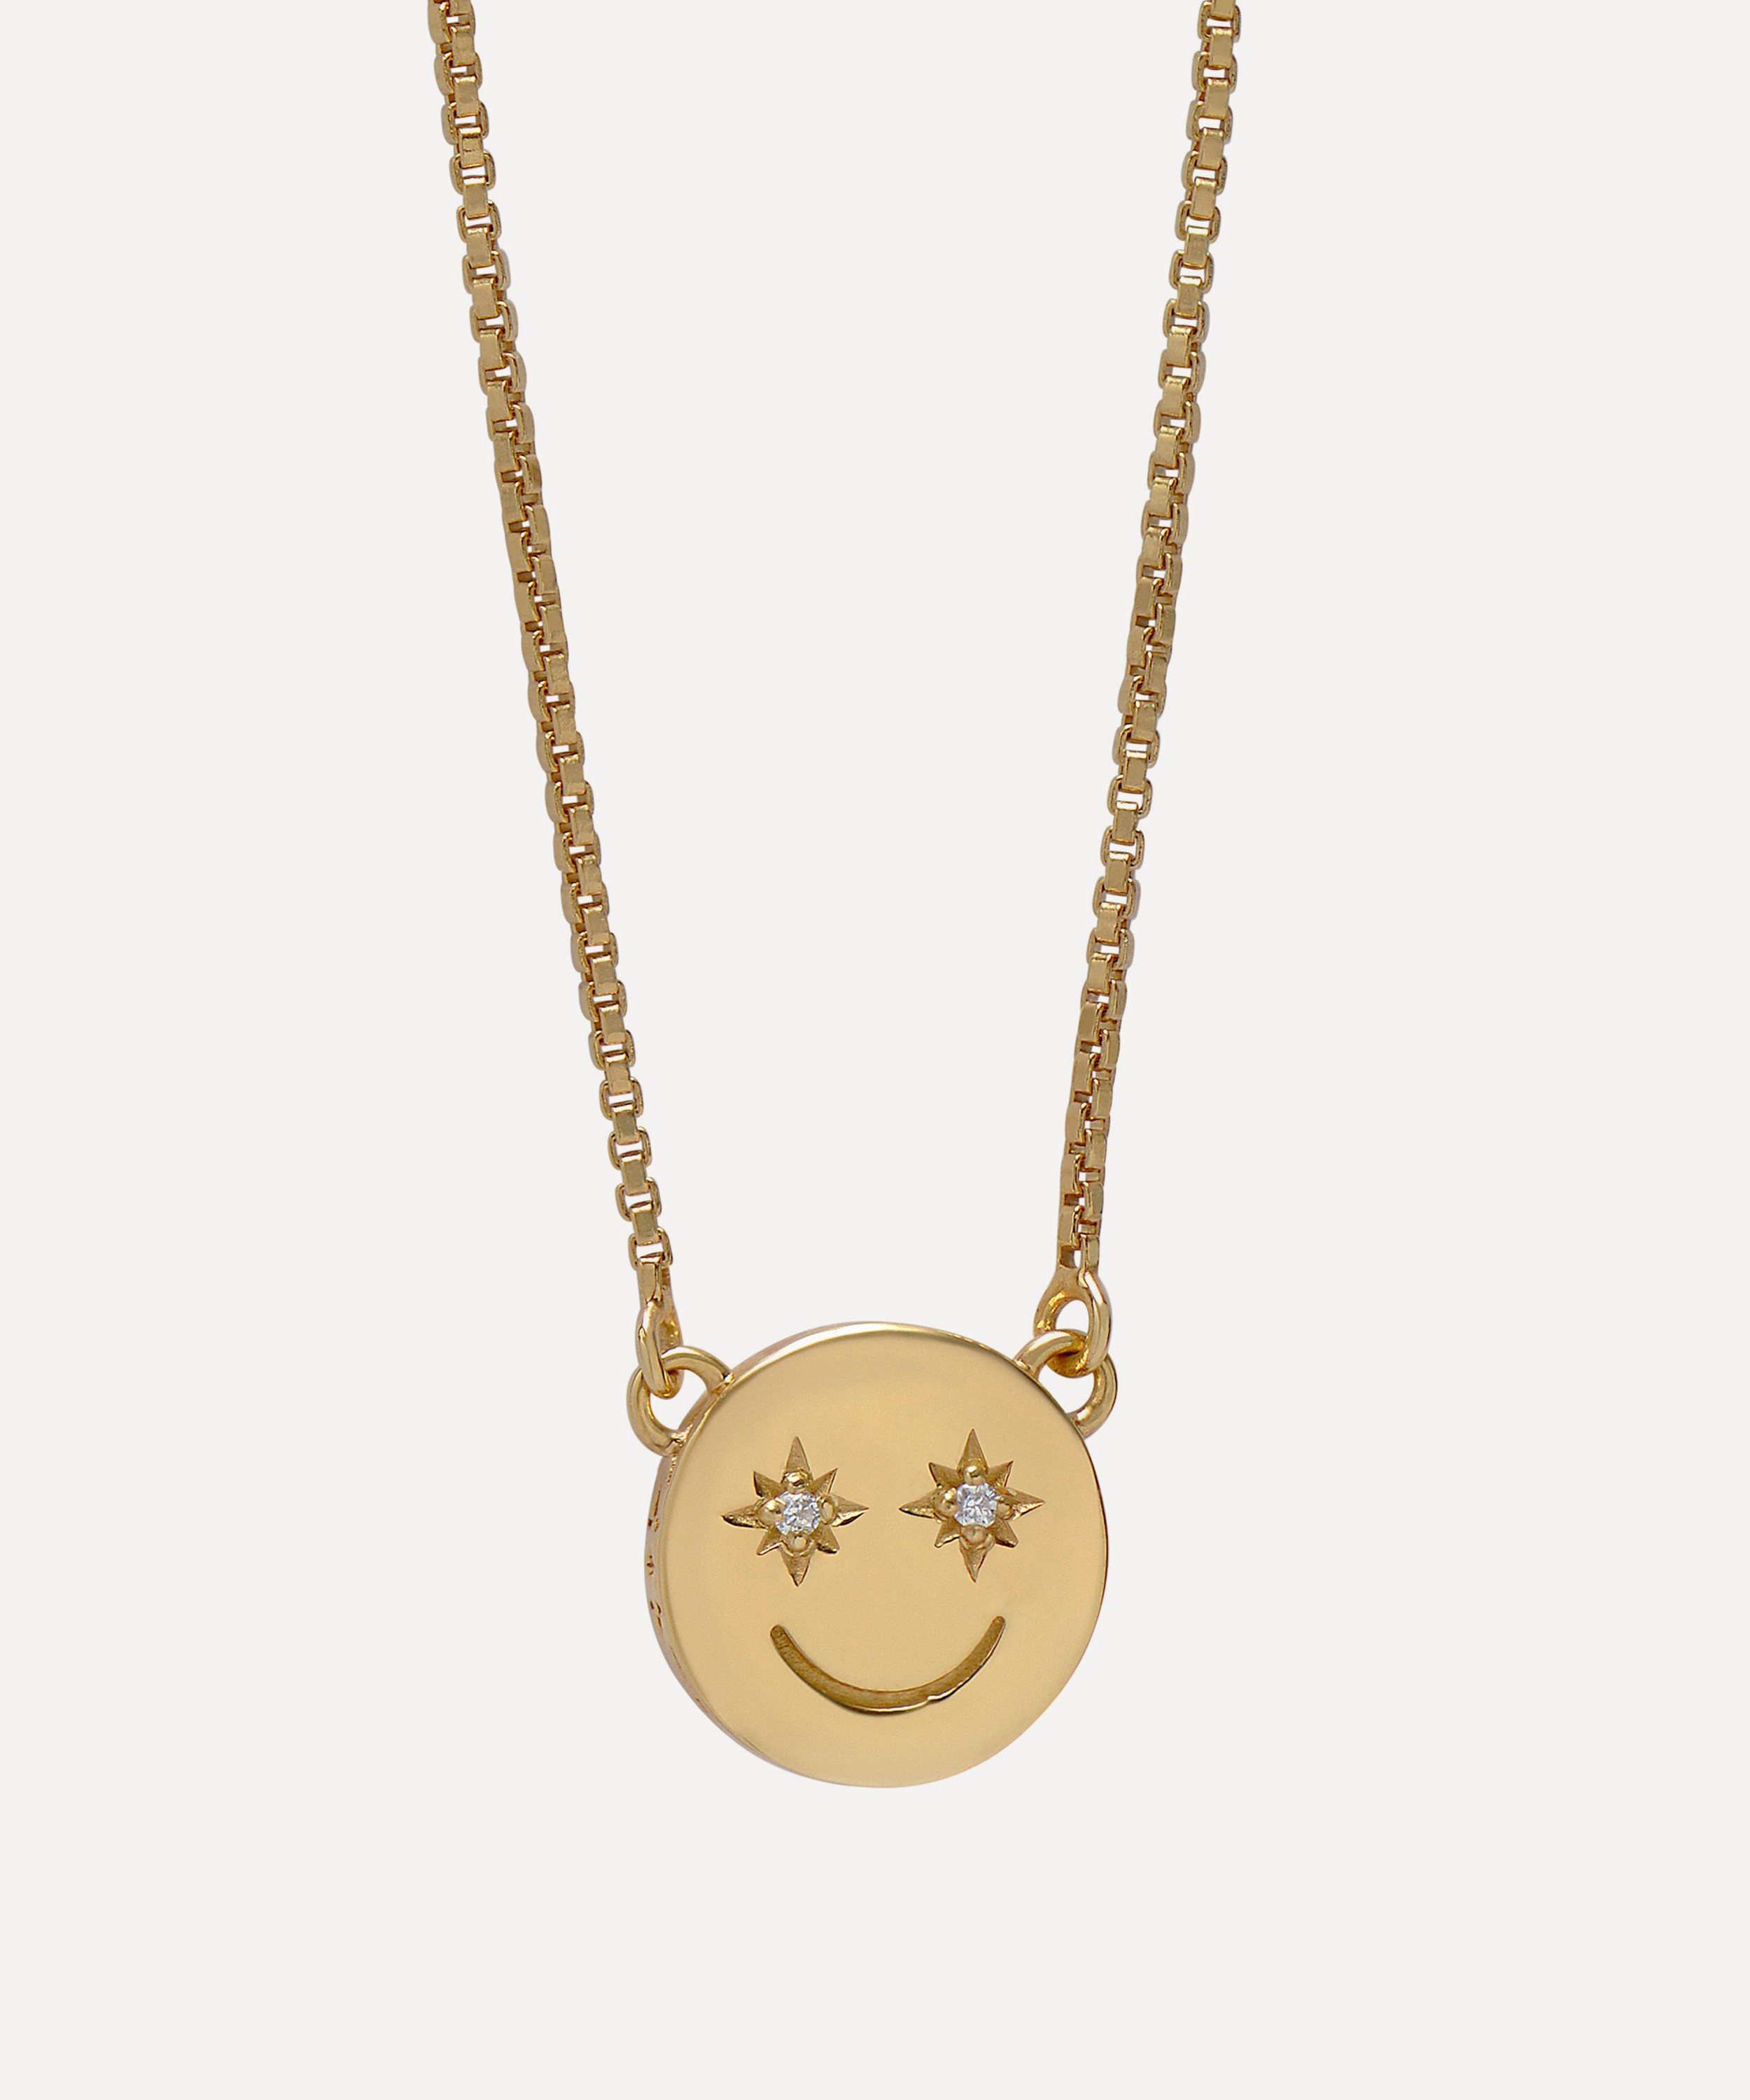 Rachel Jackson - 22ct Gold-Plated Mini Happy Face Pendant Necklace